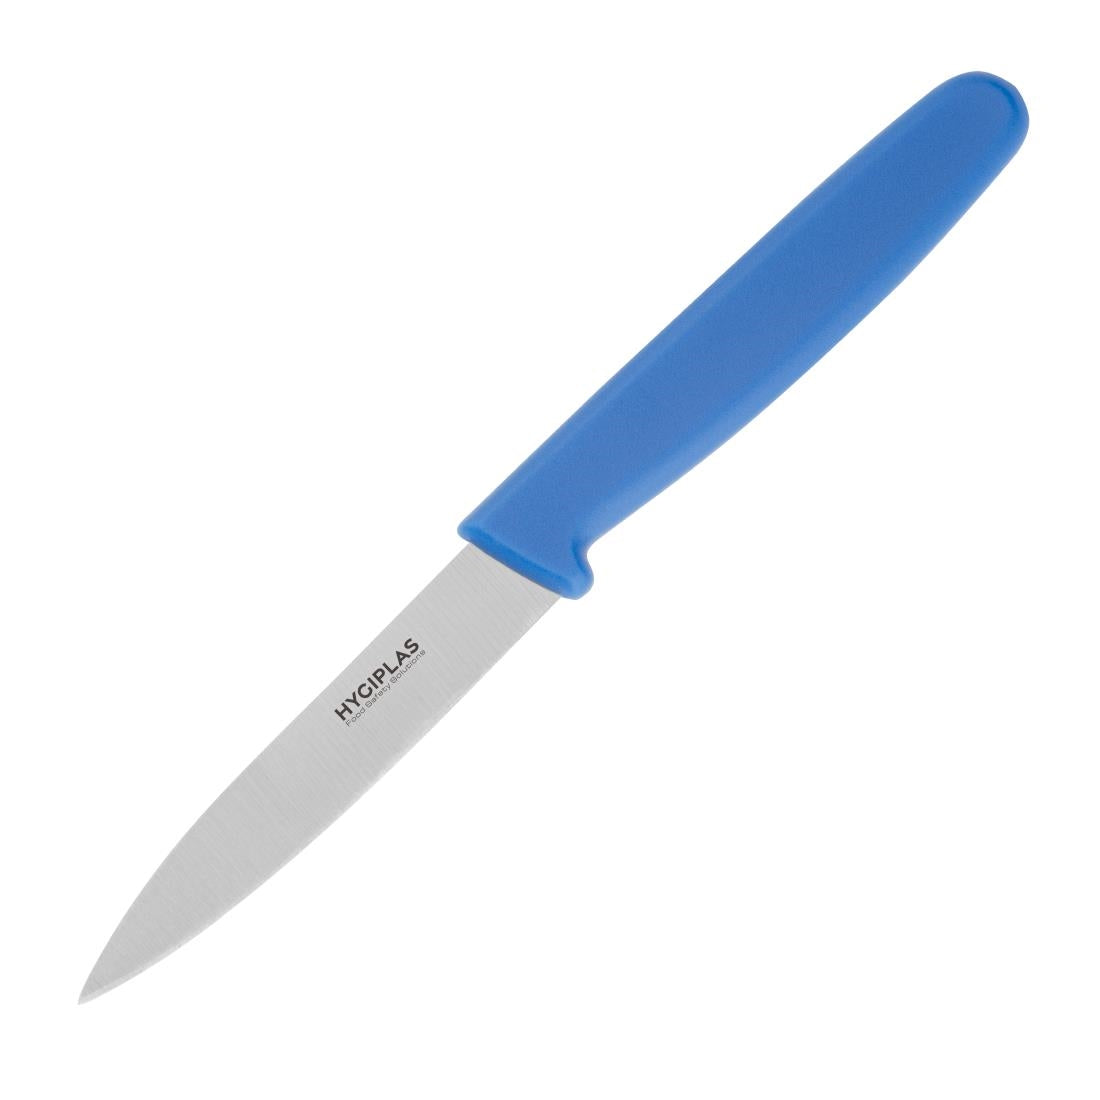 C544 Hygiplas Paring Knife Blue 7.5cm JD Catering Equipment Solutions Ltd